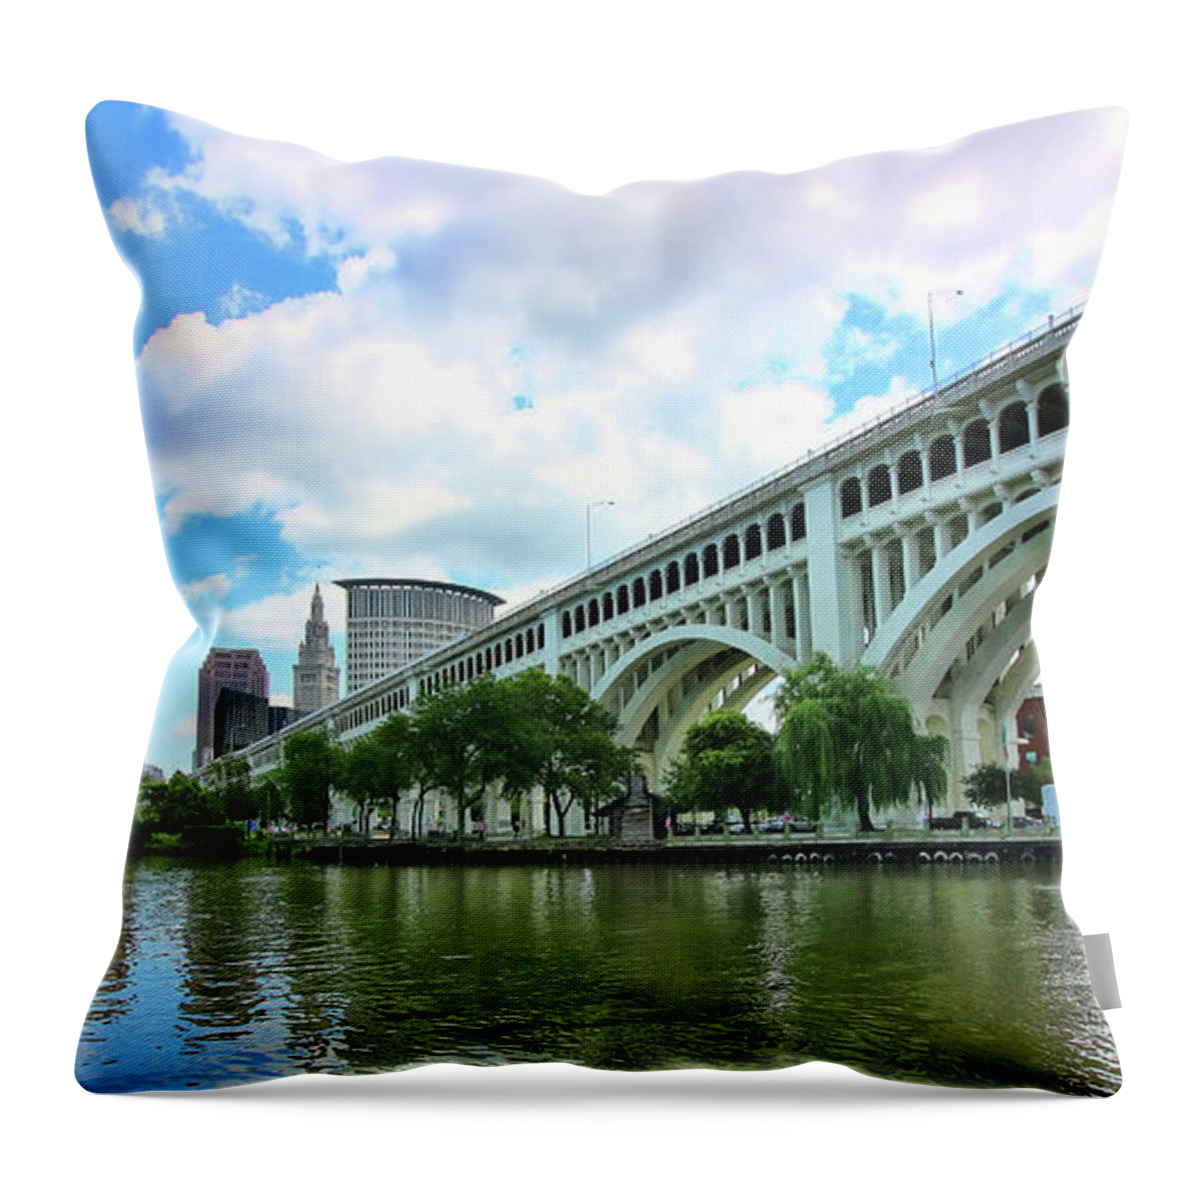 Detroit Superior Bridge Throw Pillow featuring the photograph Detroit Superior Bridge Cleveland Ohio 2021 by Jack Schultz